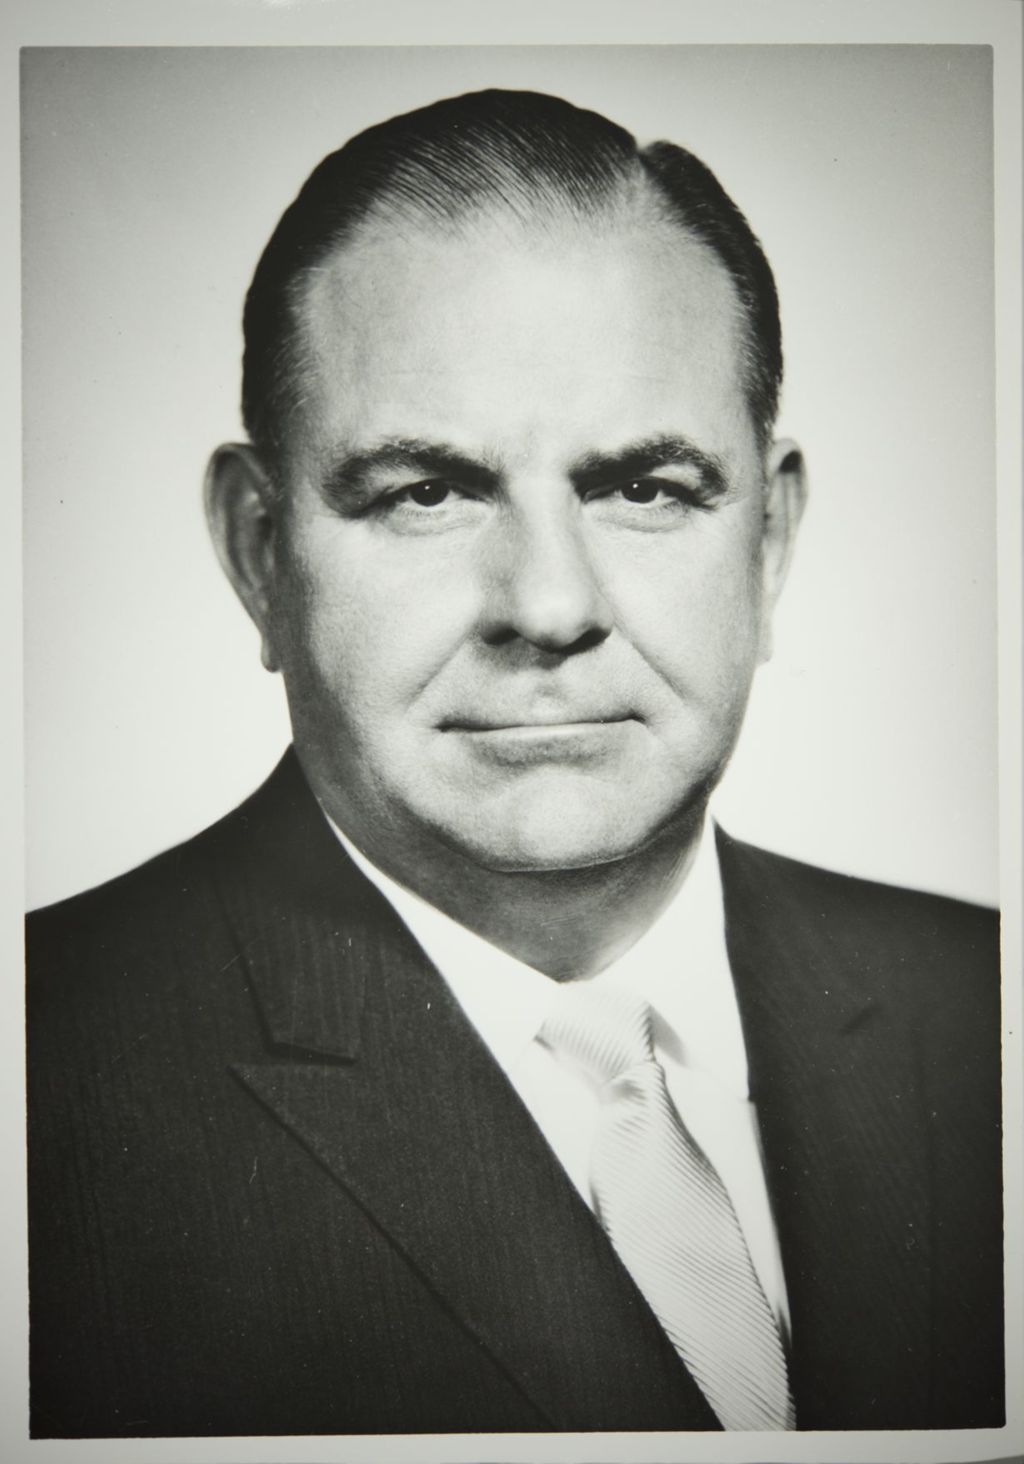 Miniature of Board of Trustees member Donald R. Grimes